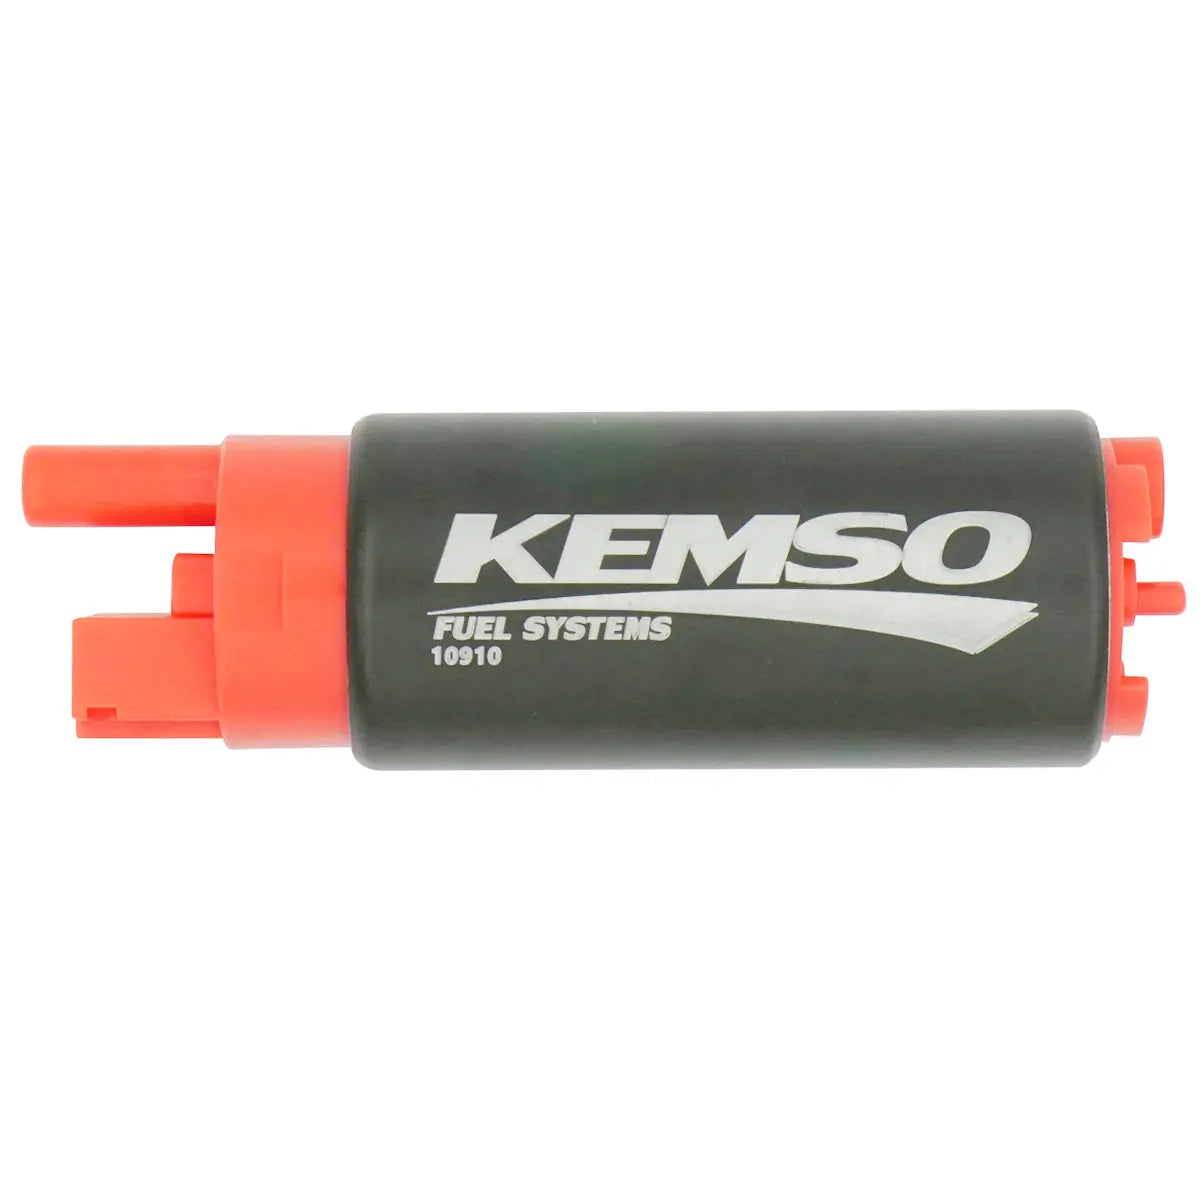 KEMSO 340LPH High Performance Fuel Pump for Ford Fiesta 1989-1996 - KEMSO